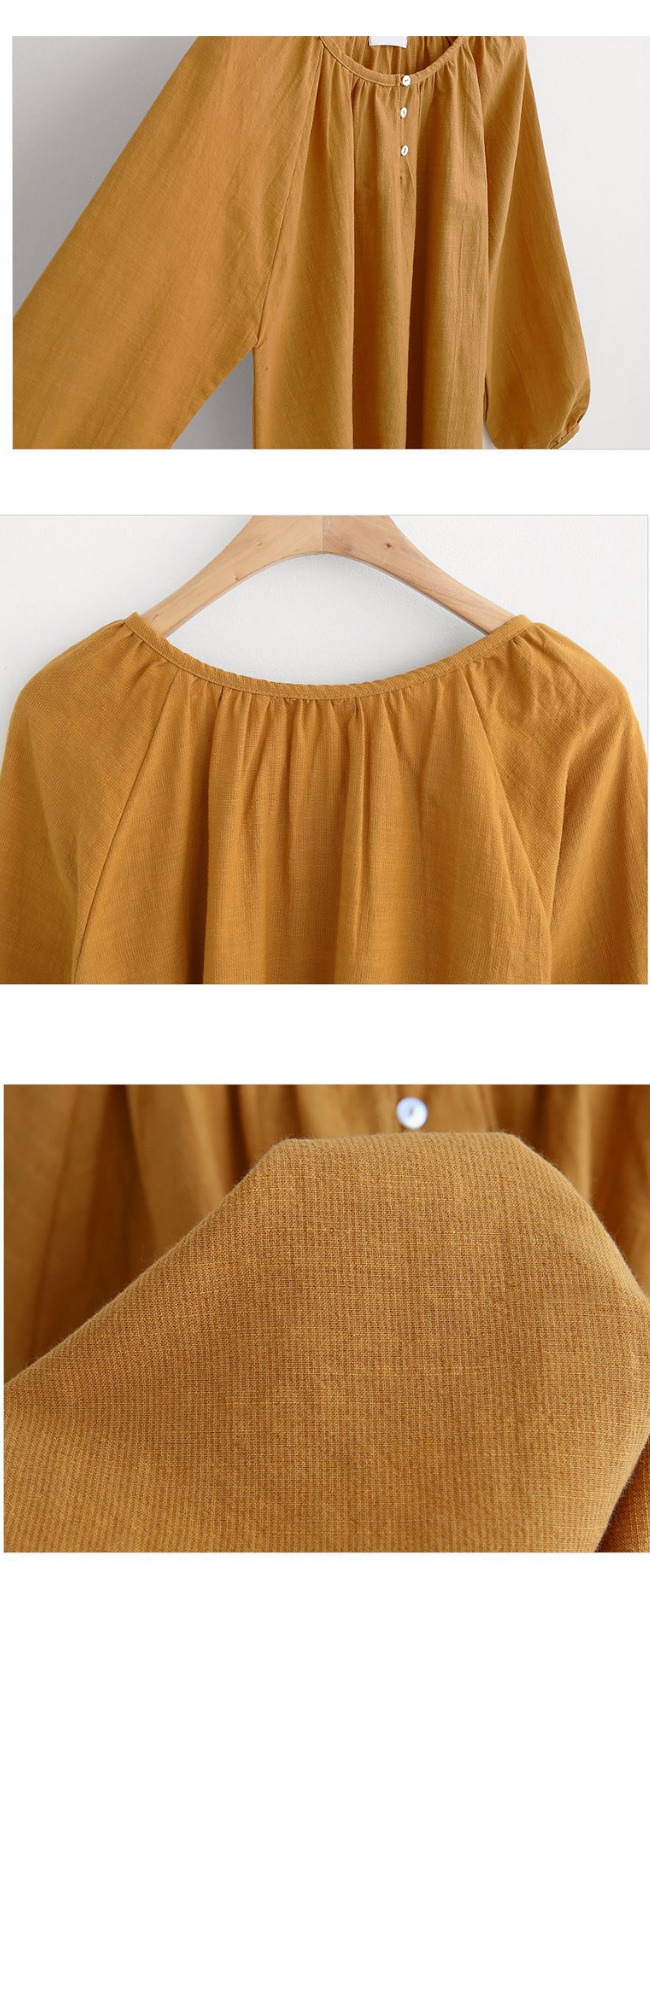 La Belleza圓領摺皺三釦燈籠袖素色棉麻襯衫L~4L